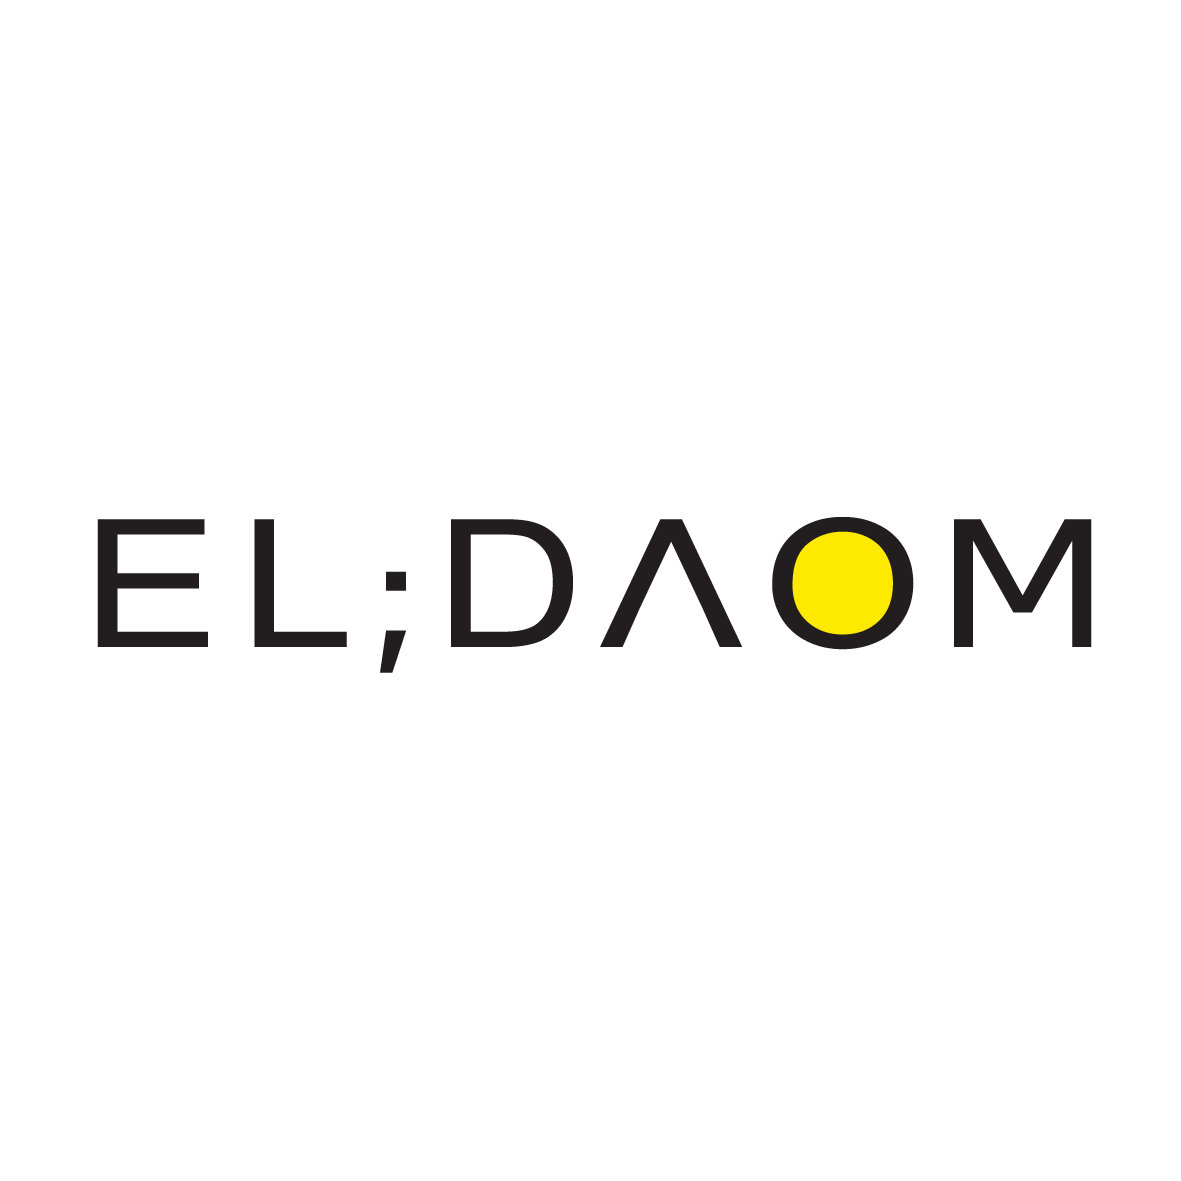 ELDAOM Co., Ltd.